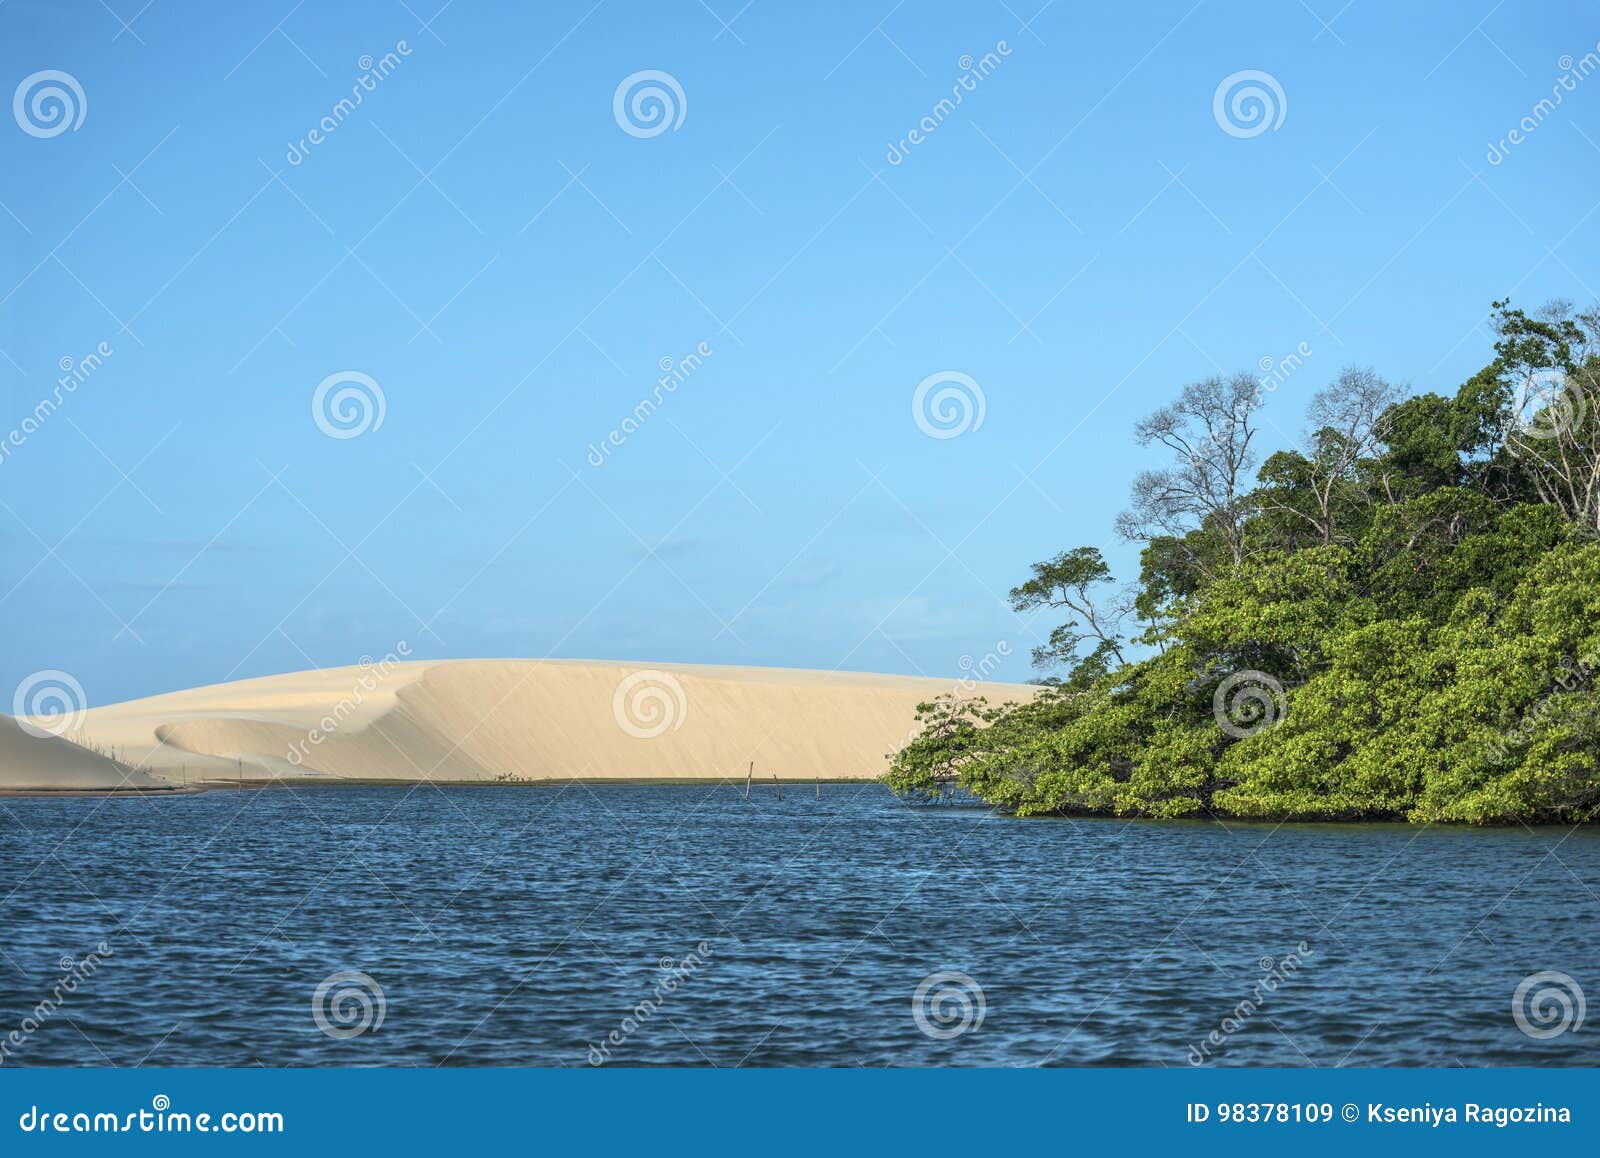 parnaiba river, brazil`s northeast region